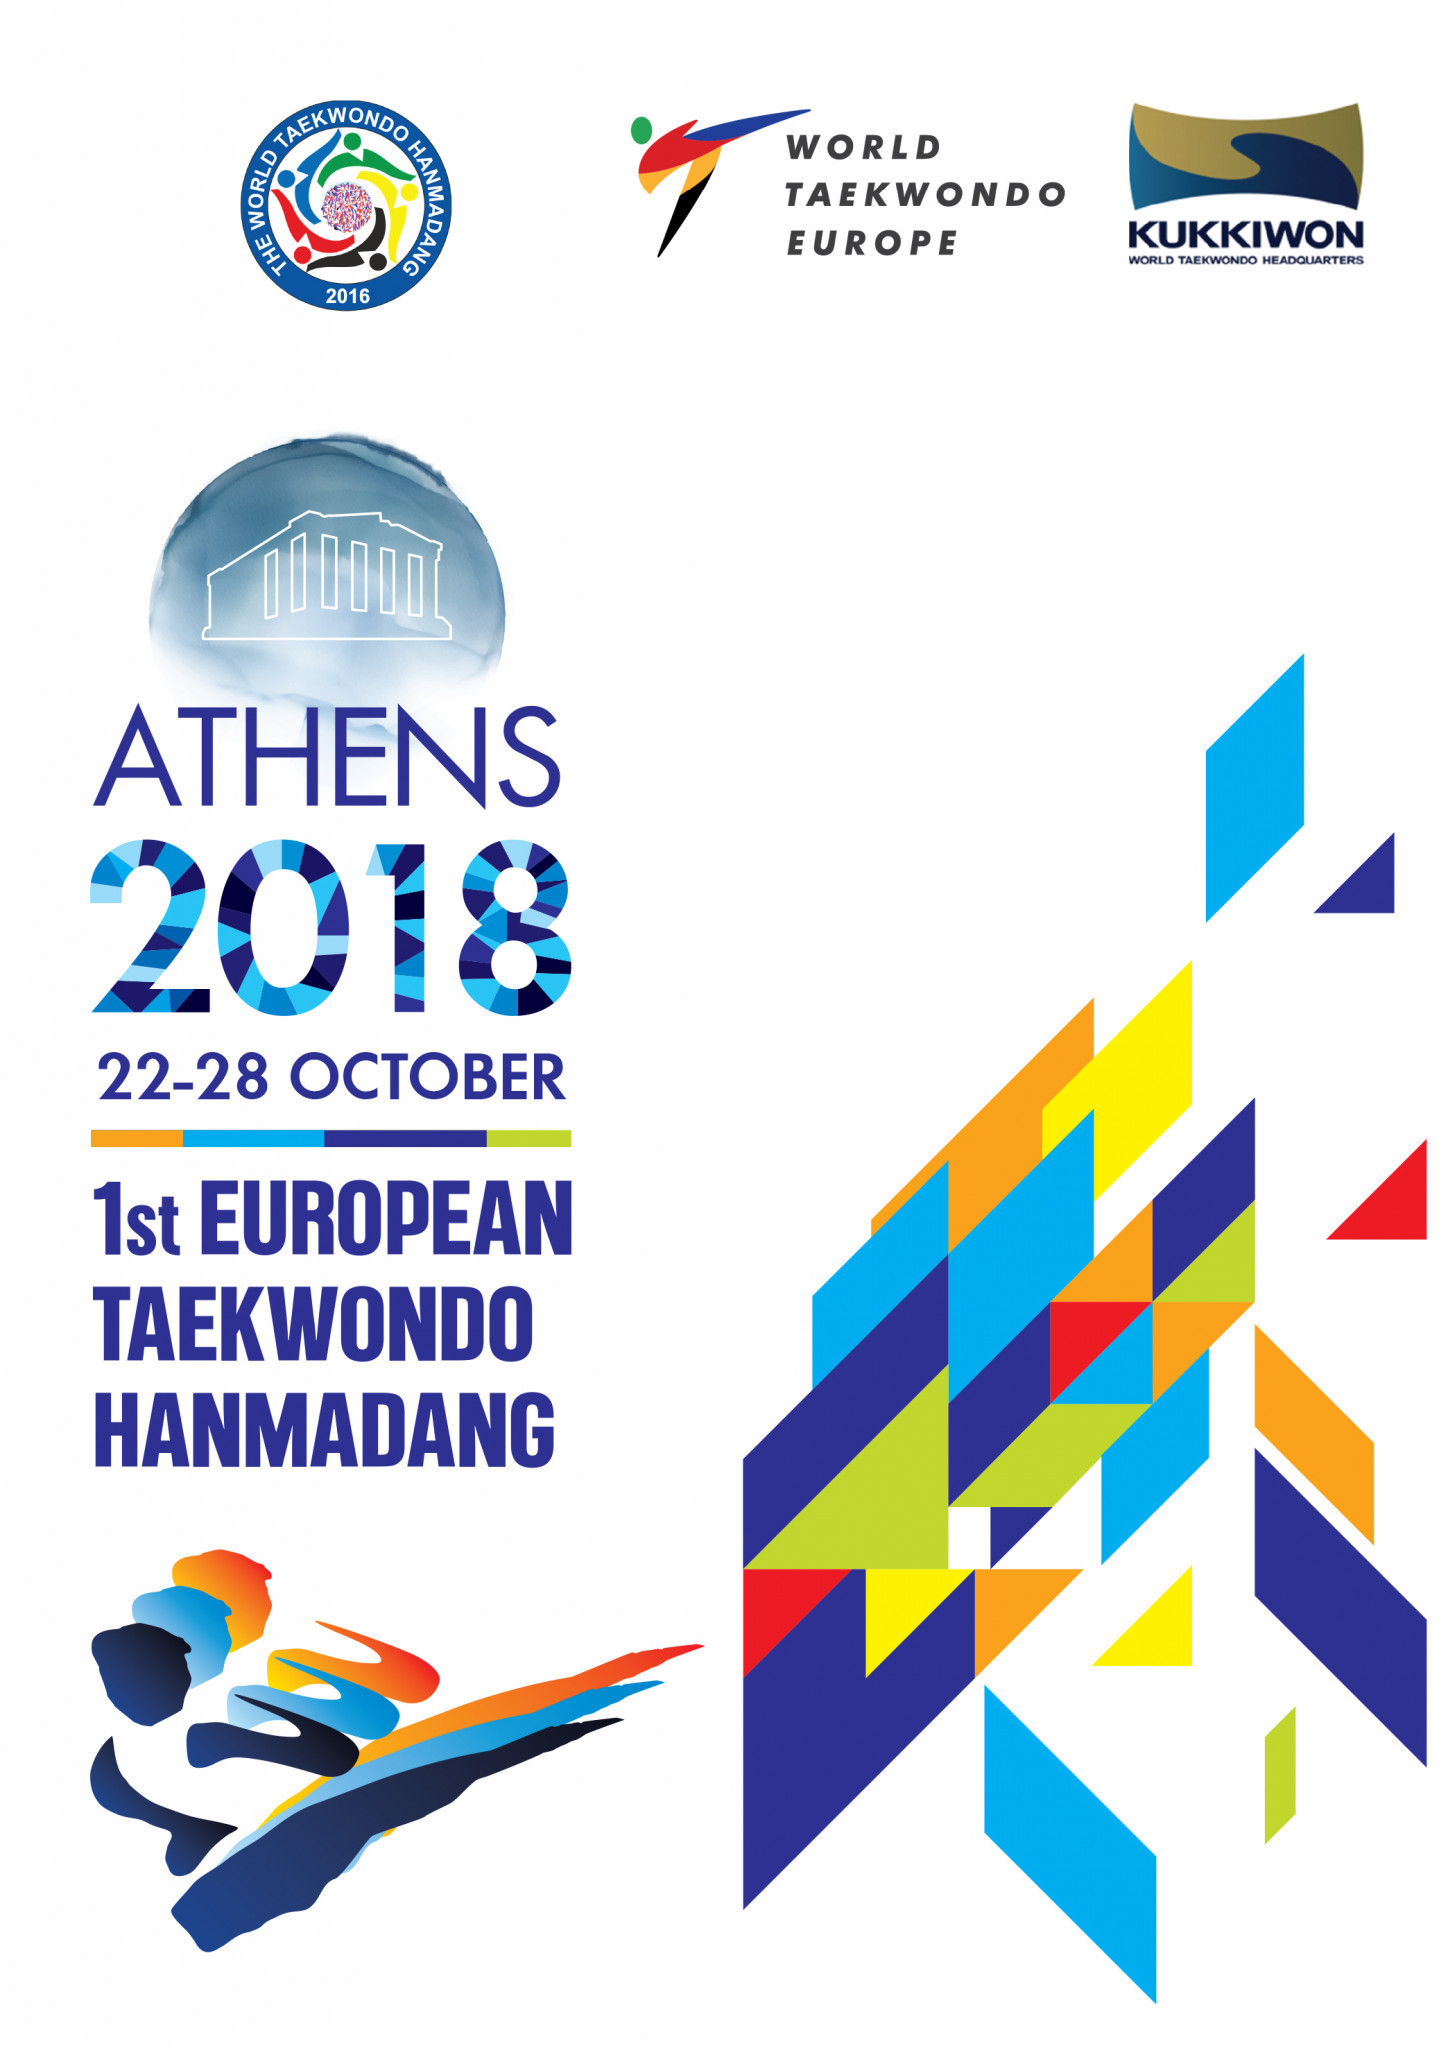 World Taekwondo Europe announce details of first Hanmadang festival